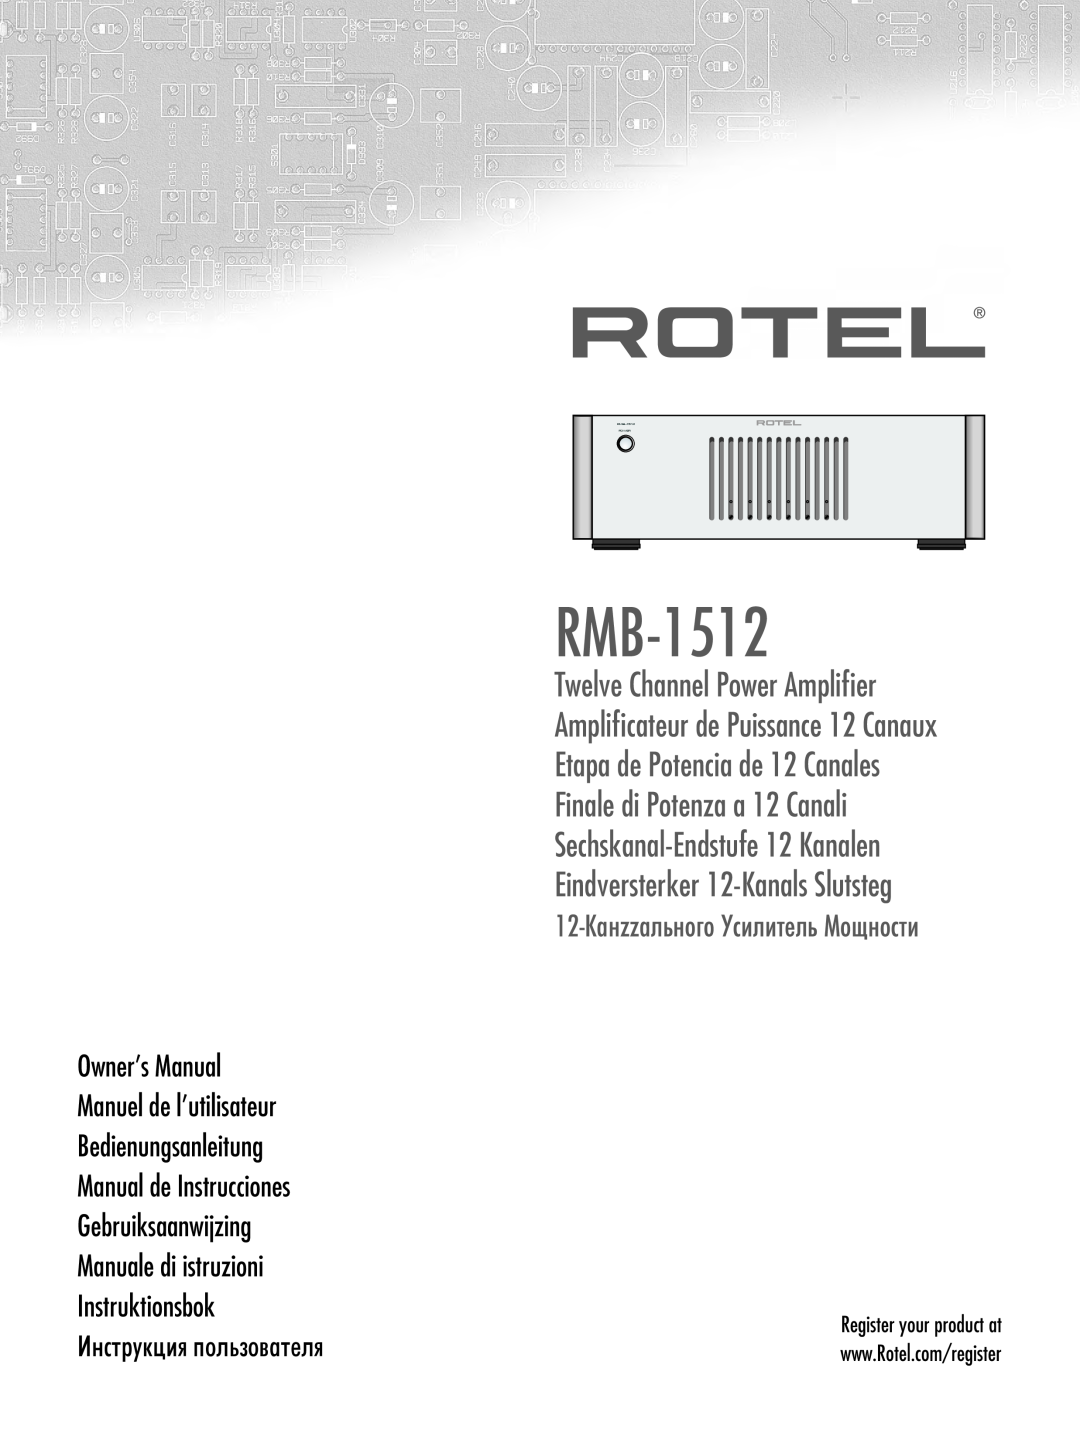 Rotel RC-1580 owner manual 12-КанzzальногоУсилитель Мощности, RMB-1512 POWER 